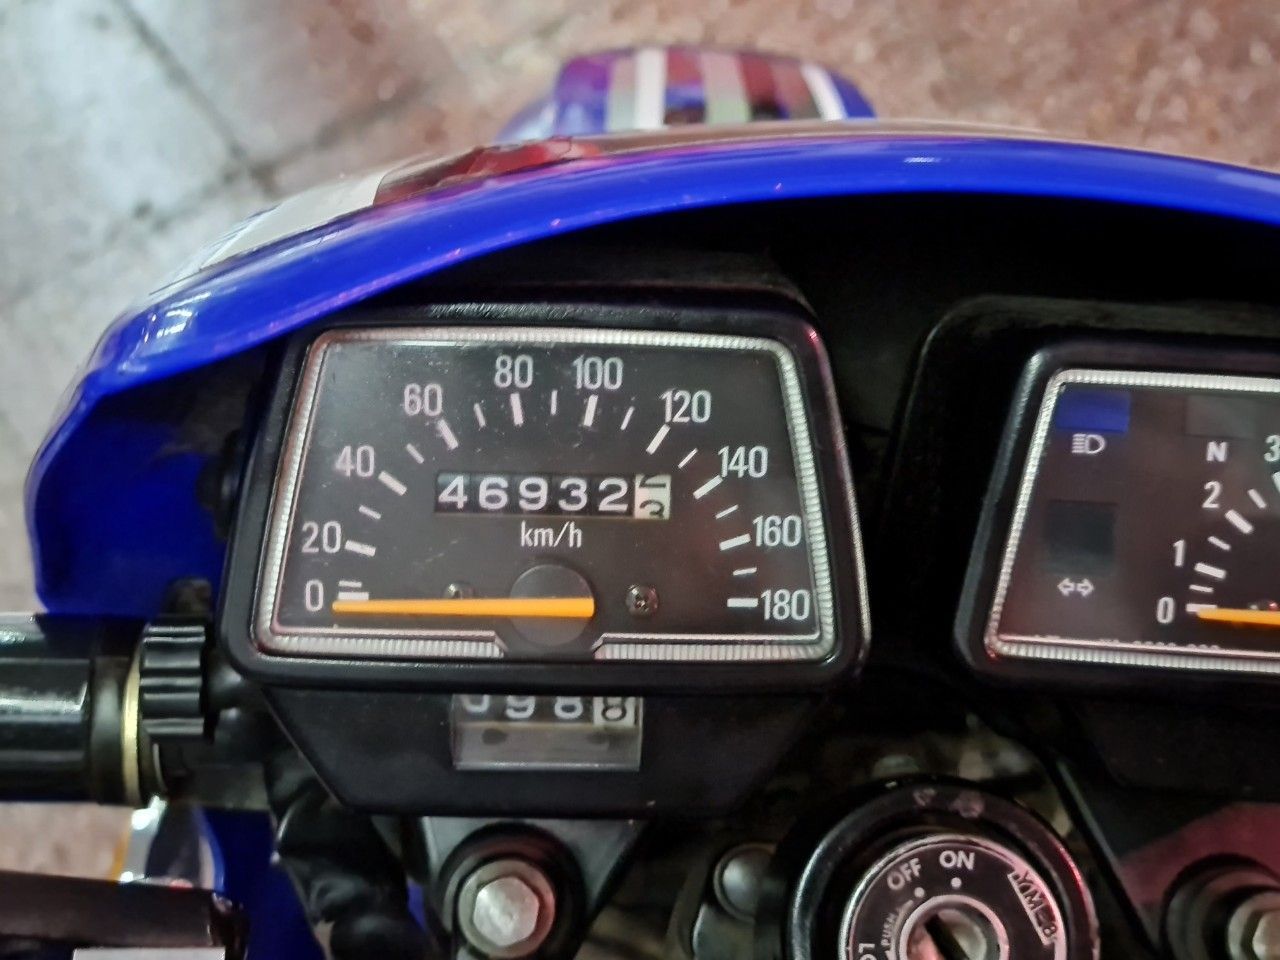 Yamaha XT Usada en Mendoza, deRuedas